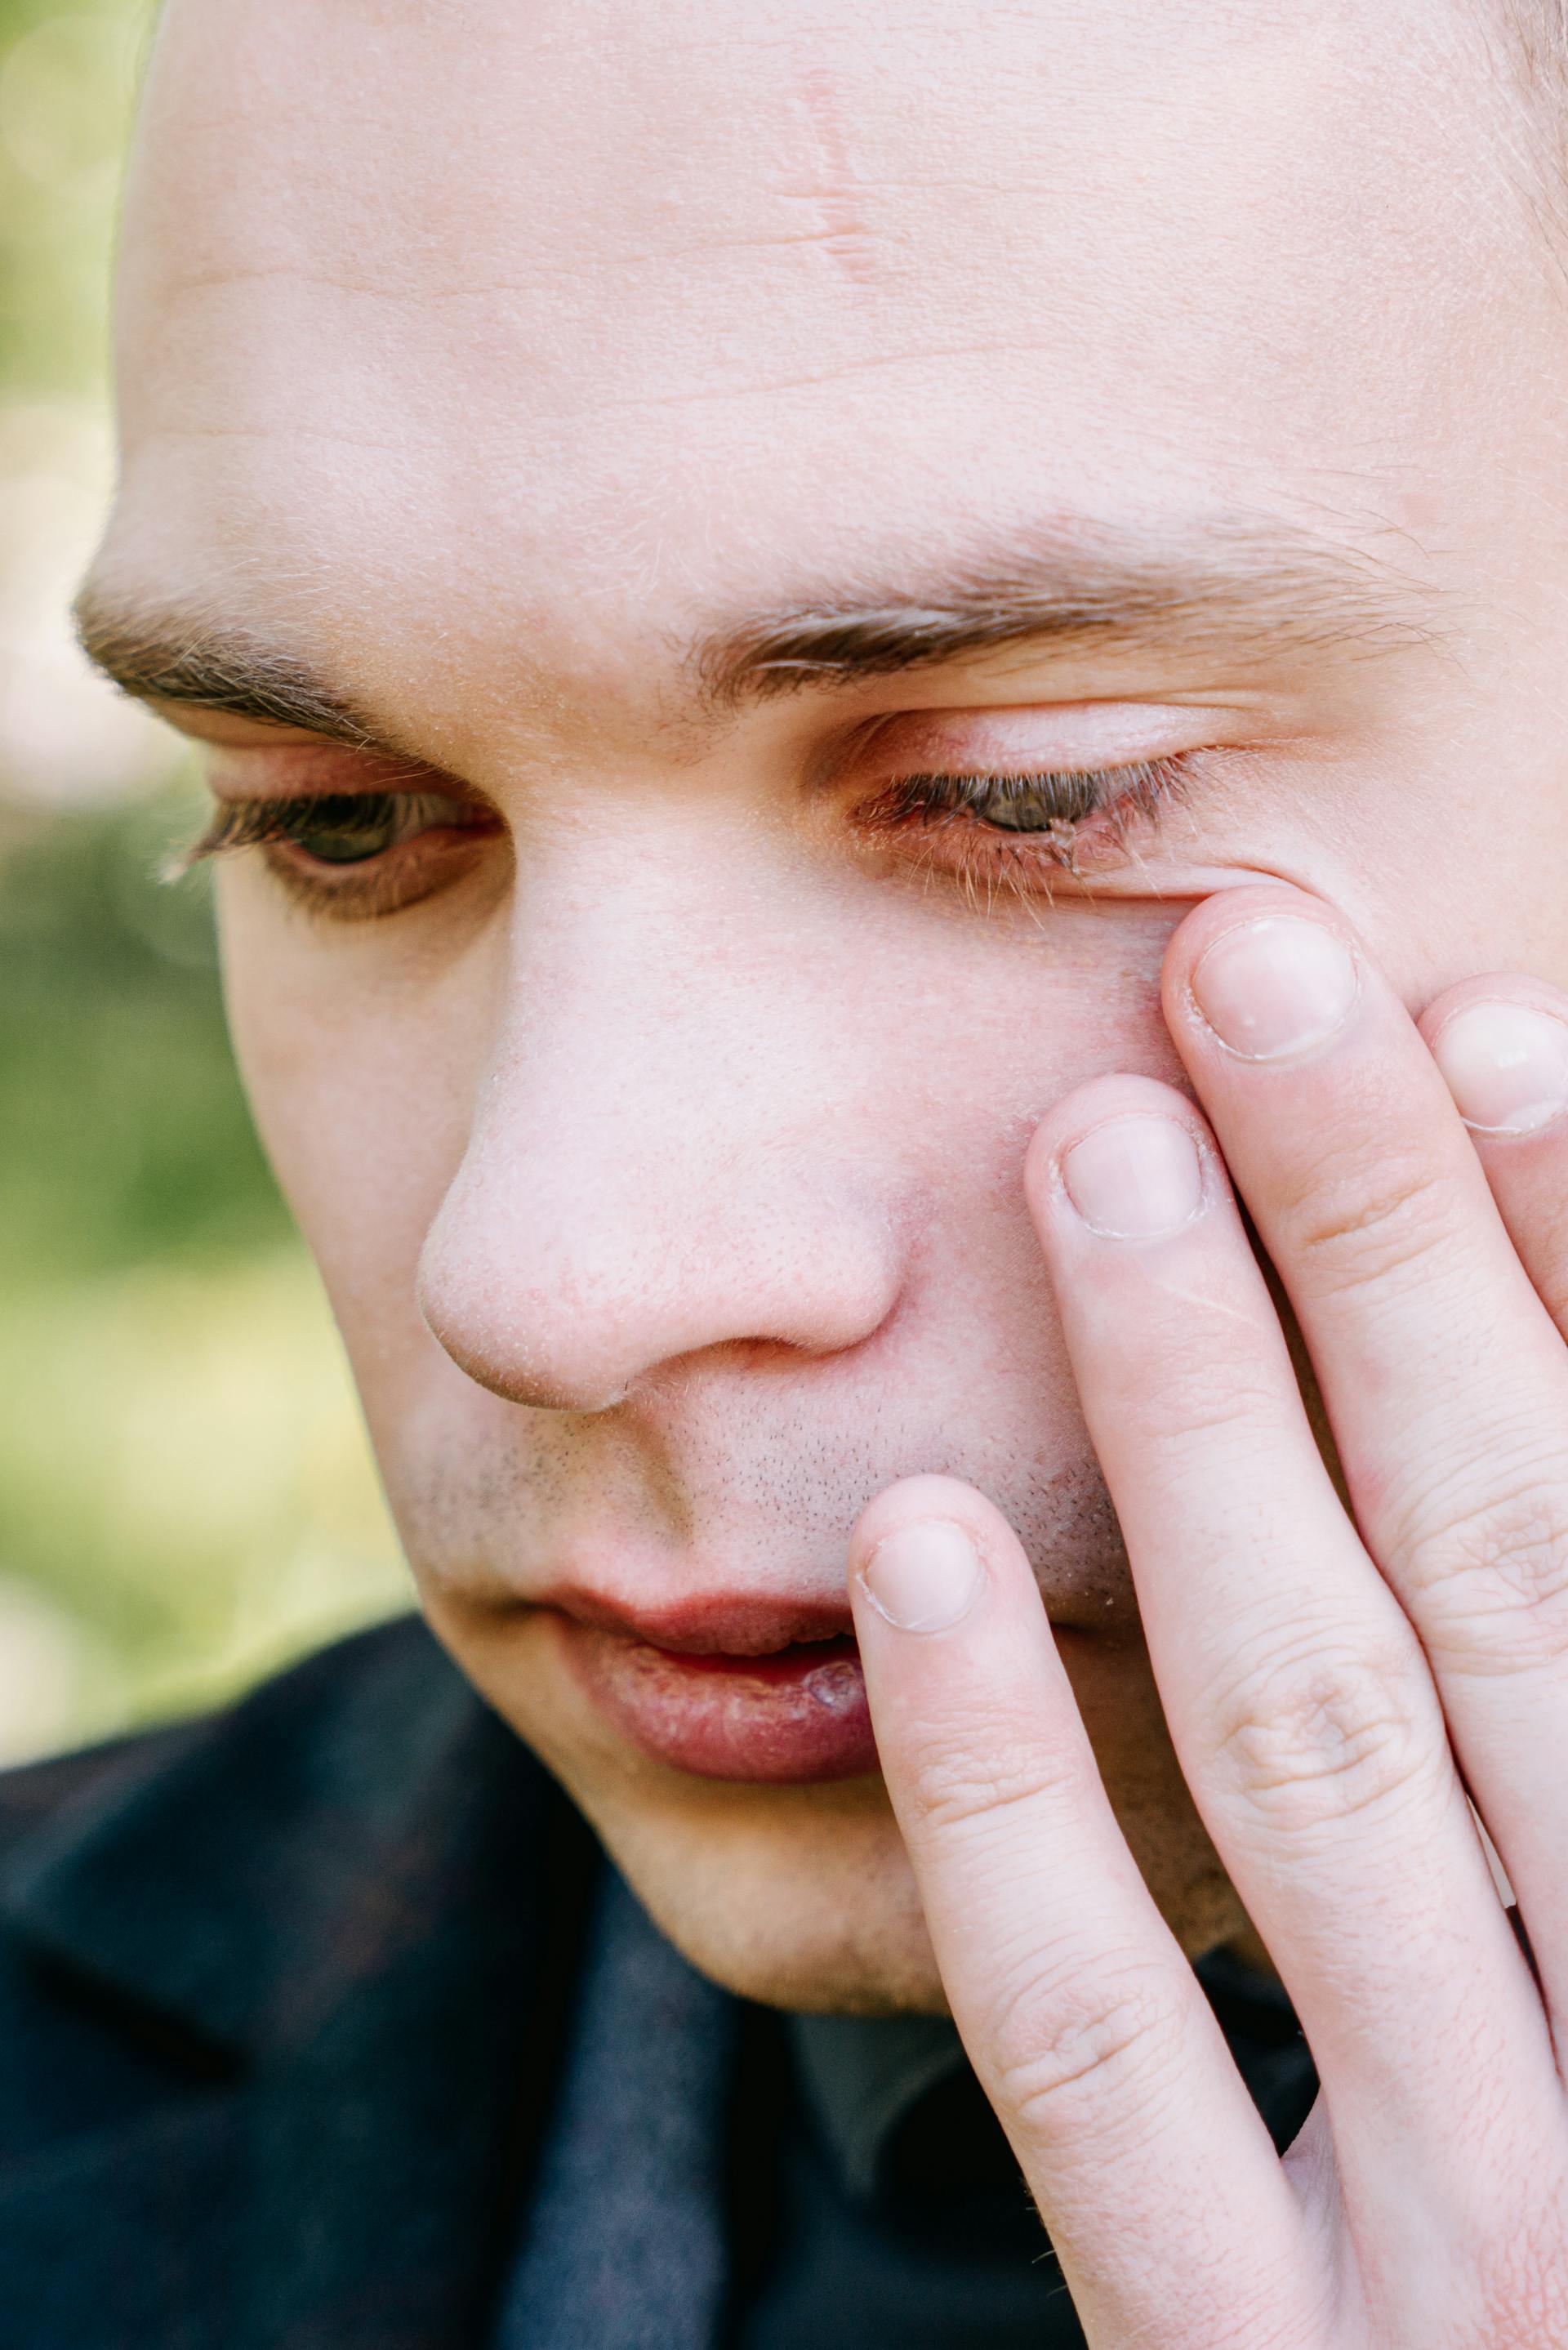 Homme essuyant ses larmes | Source : Pexels